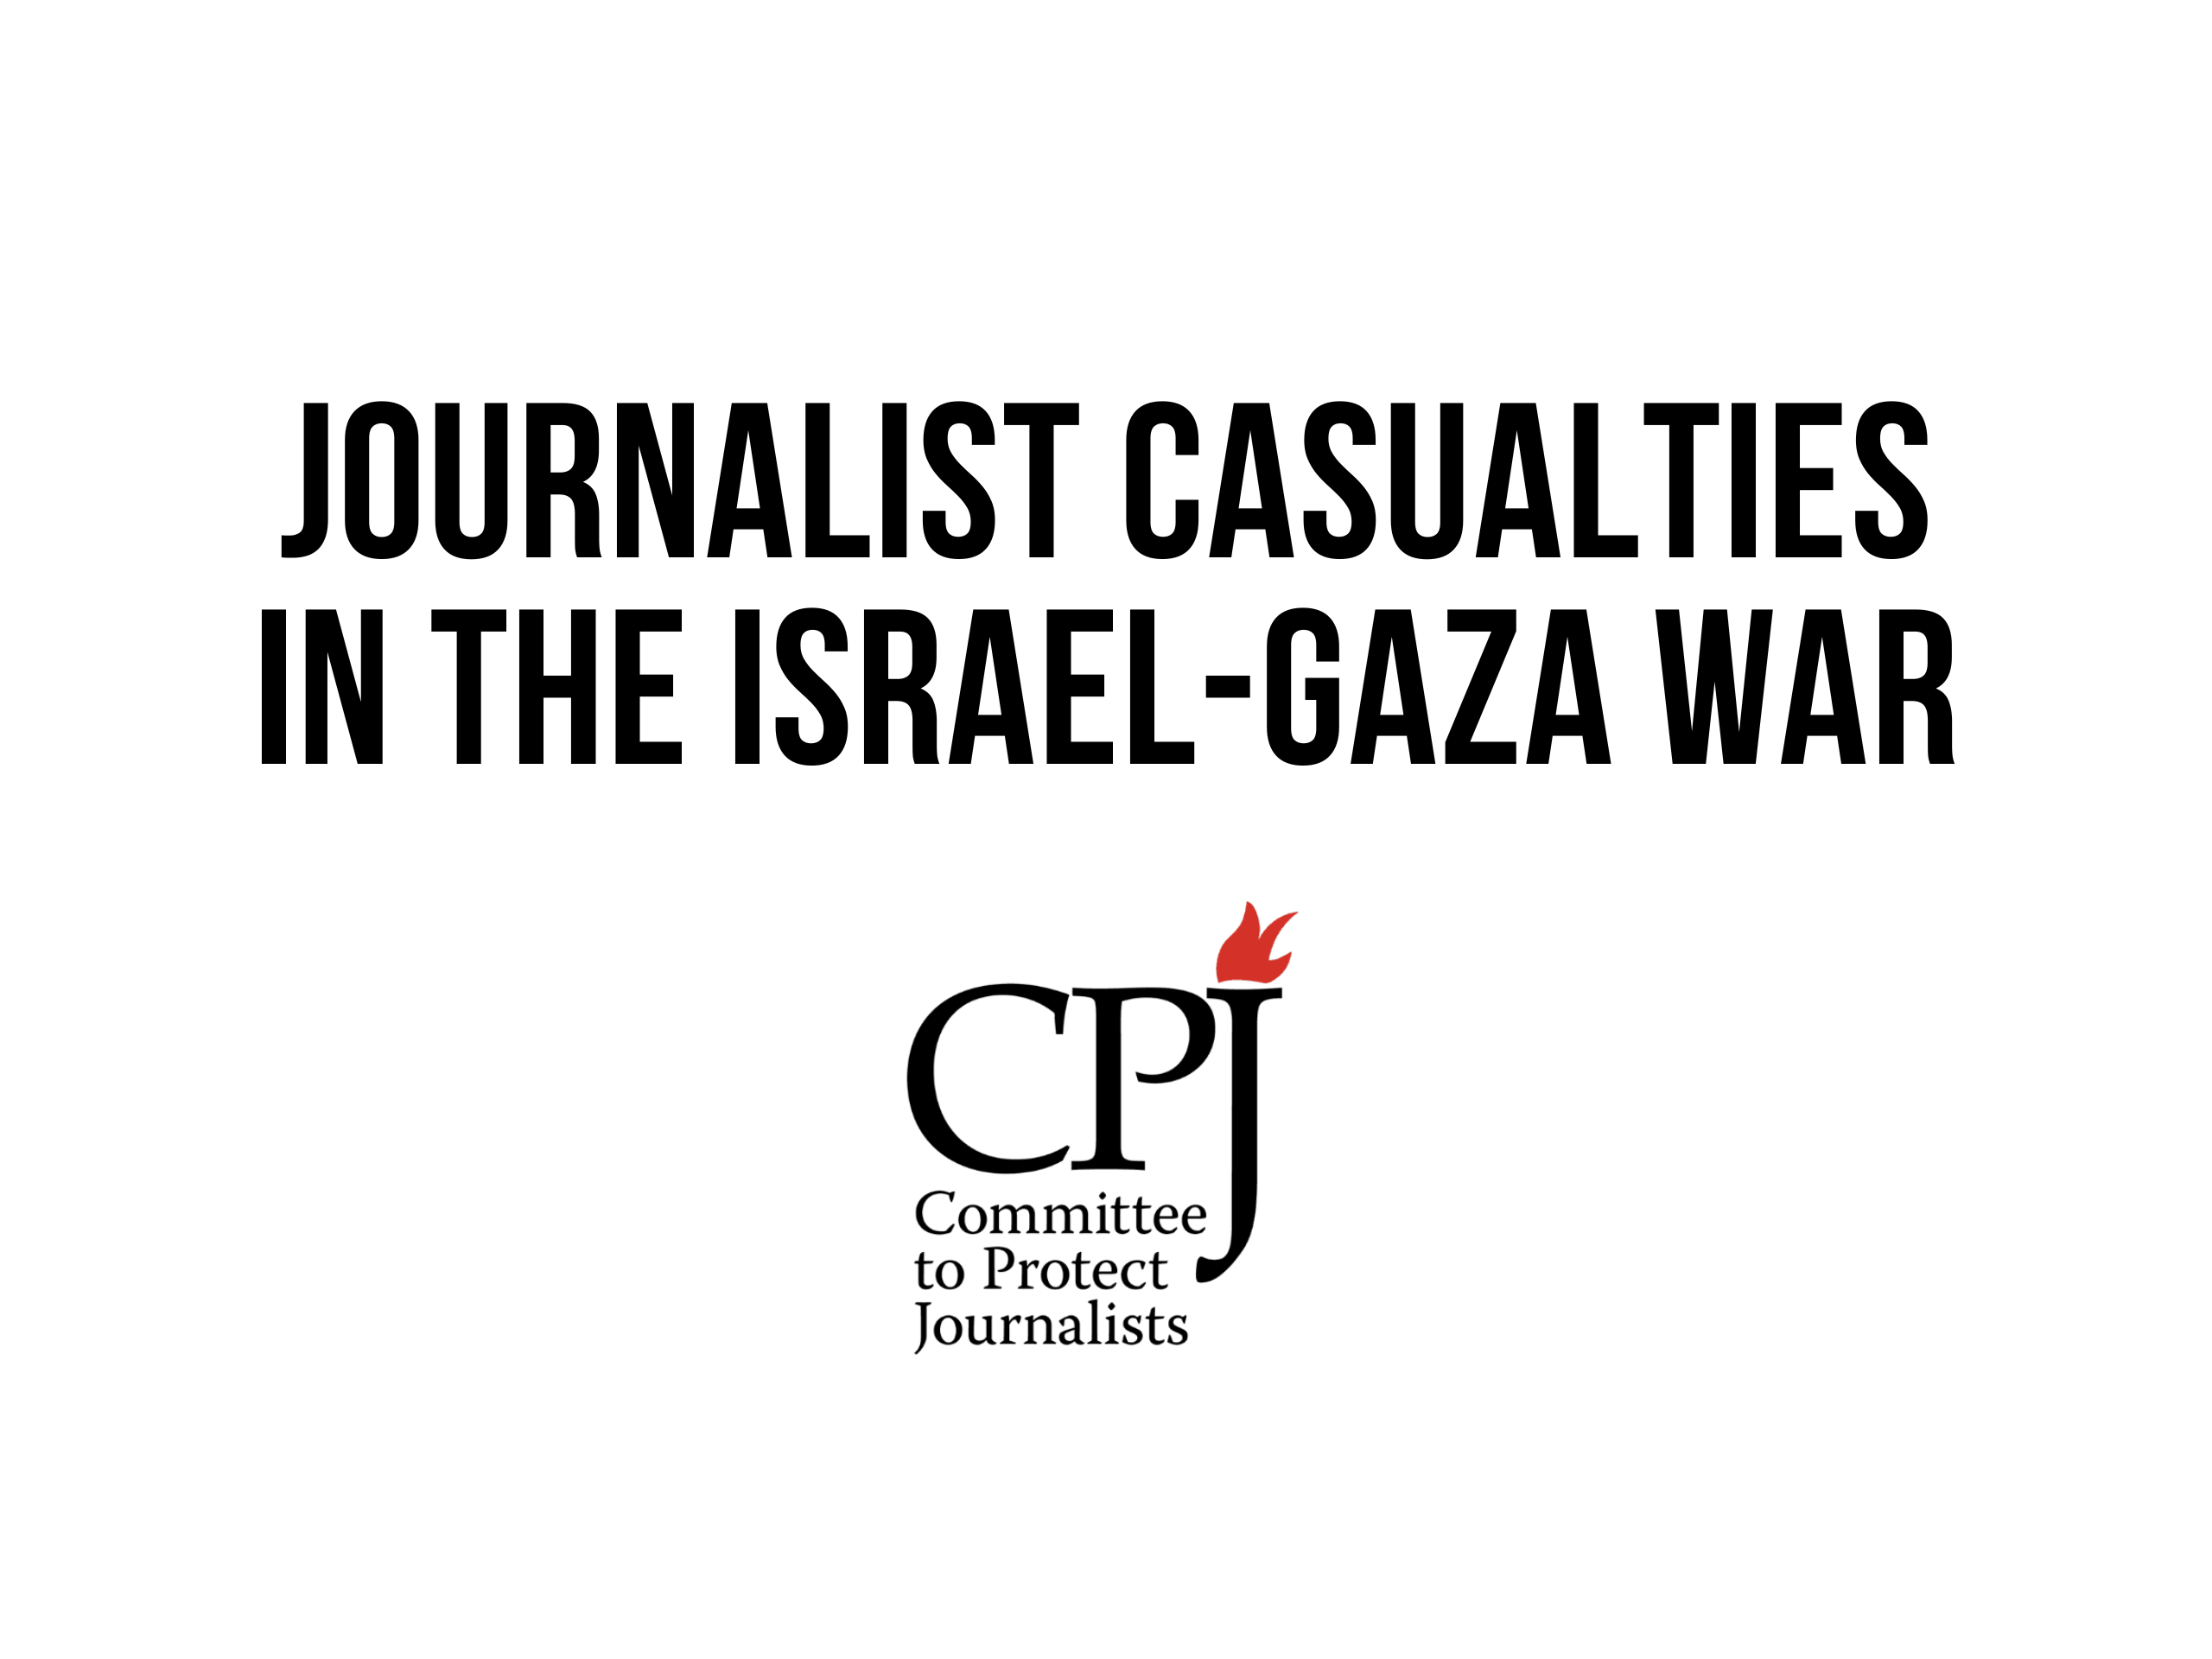 JOURNALIST CASUALTIES IN THE ISRAEL-GAZA WAR